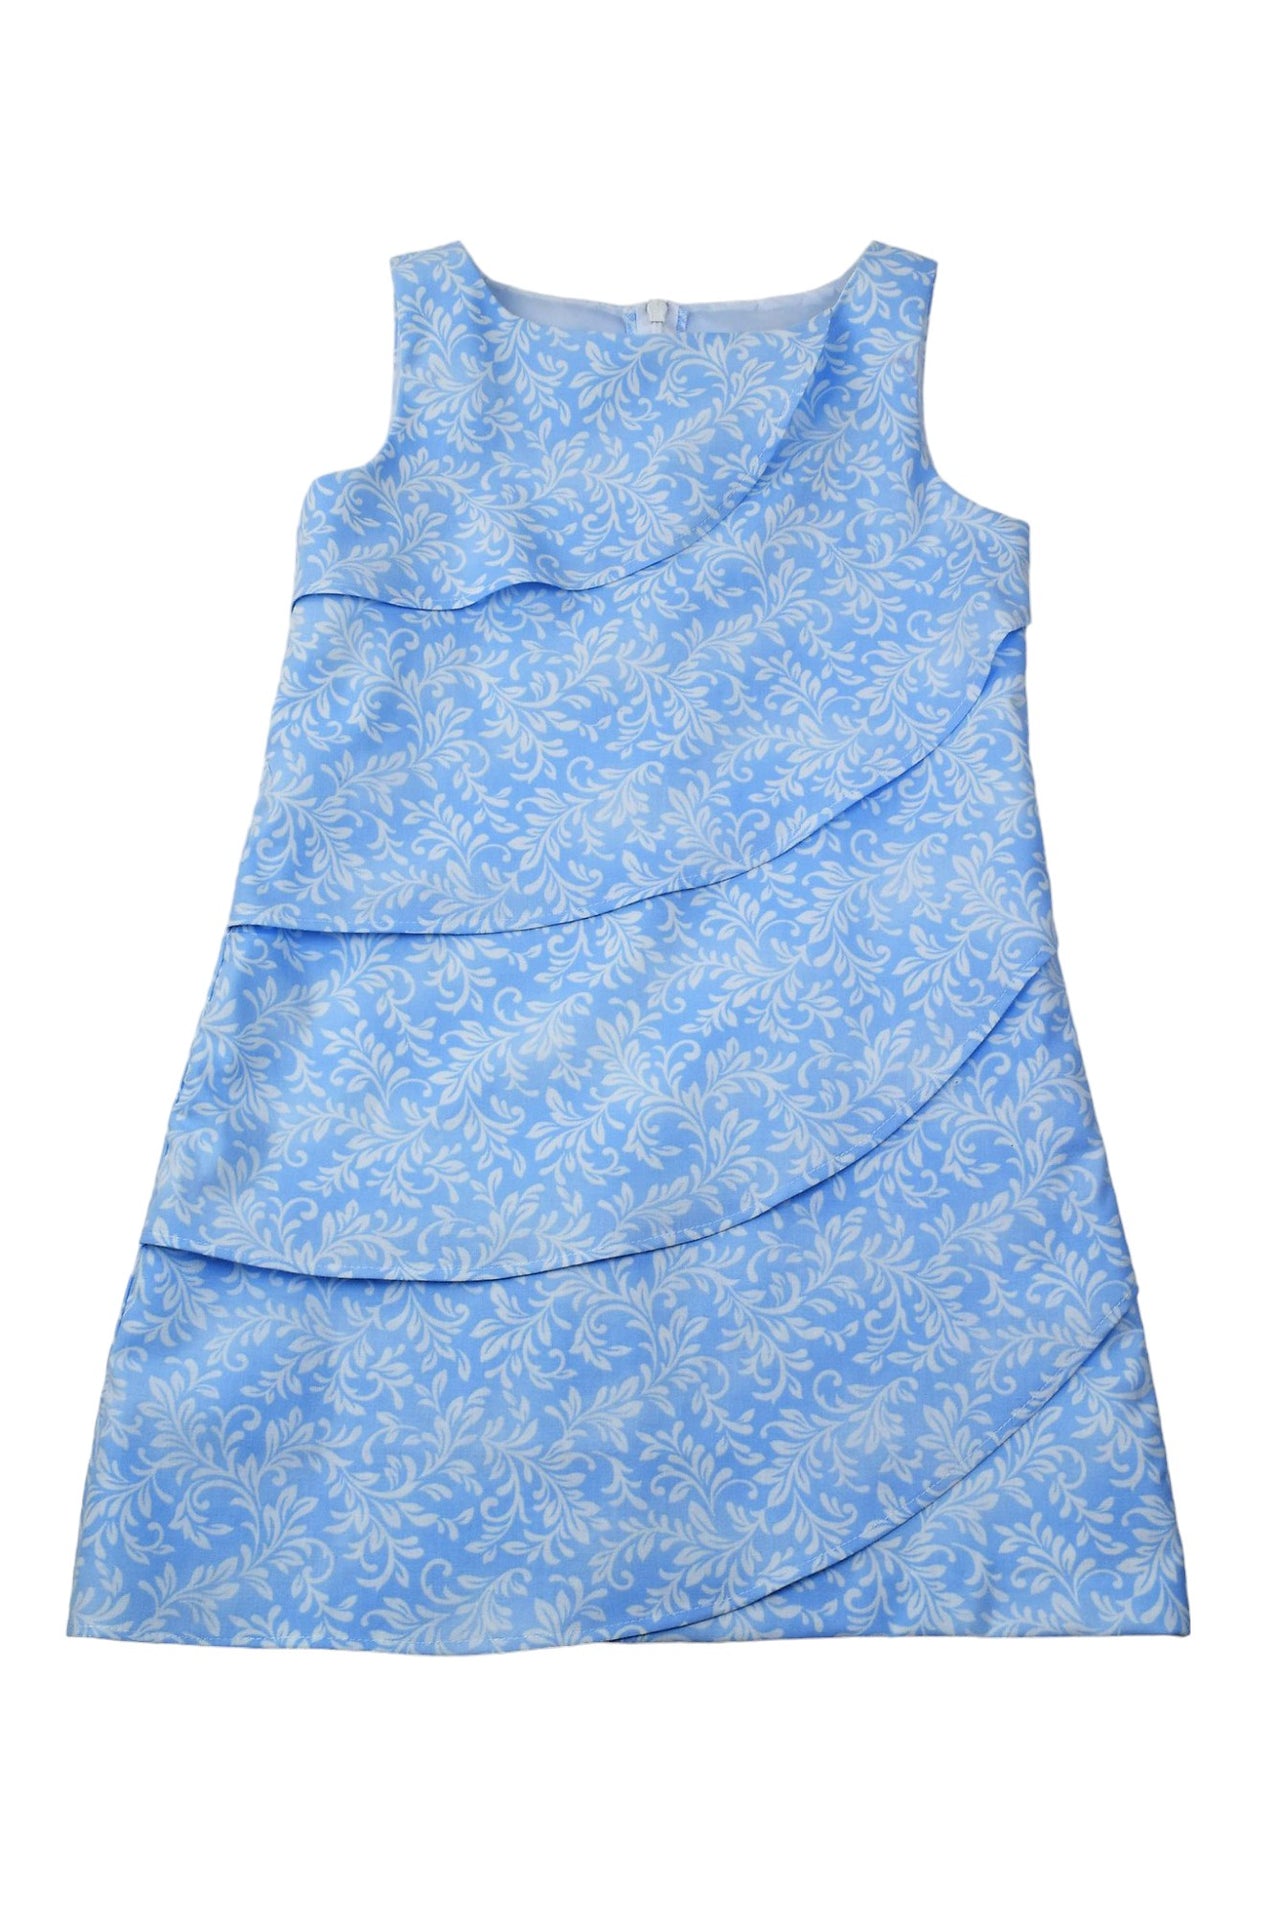 Maggie Breen Tiered Dress Blue/White Print 70761 5012